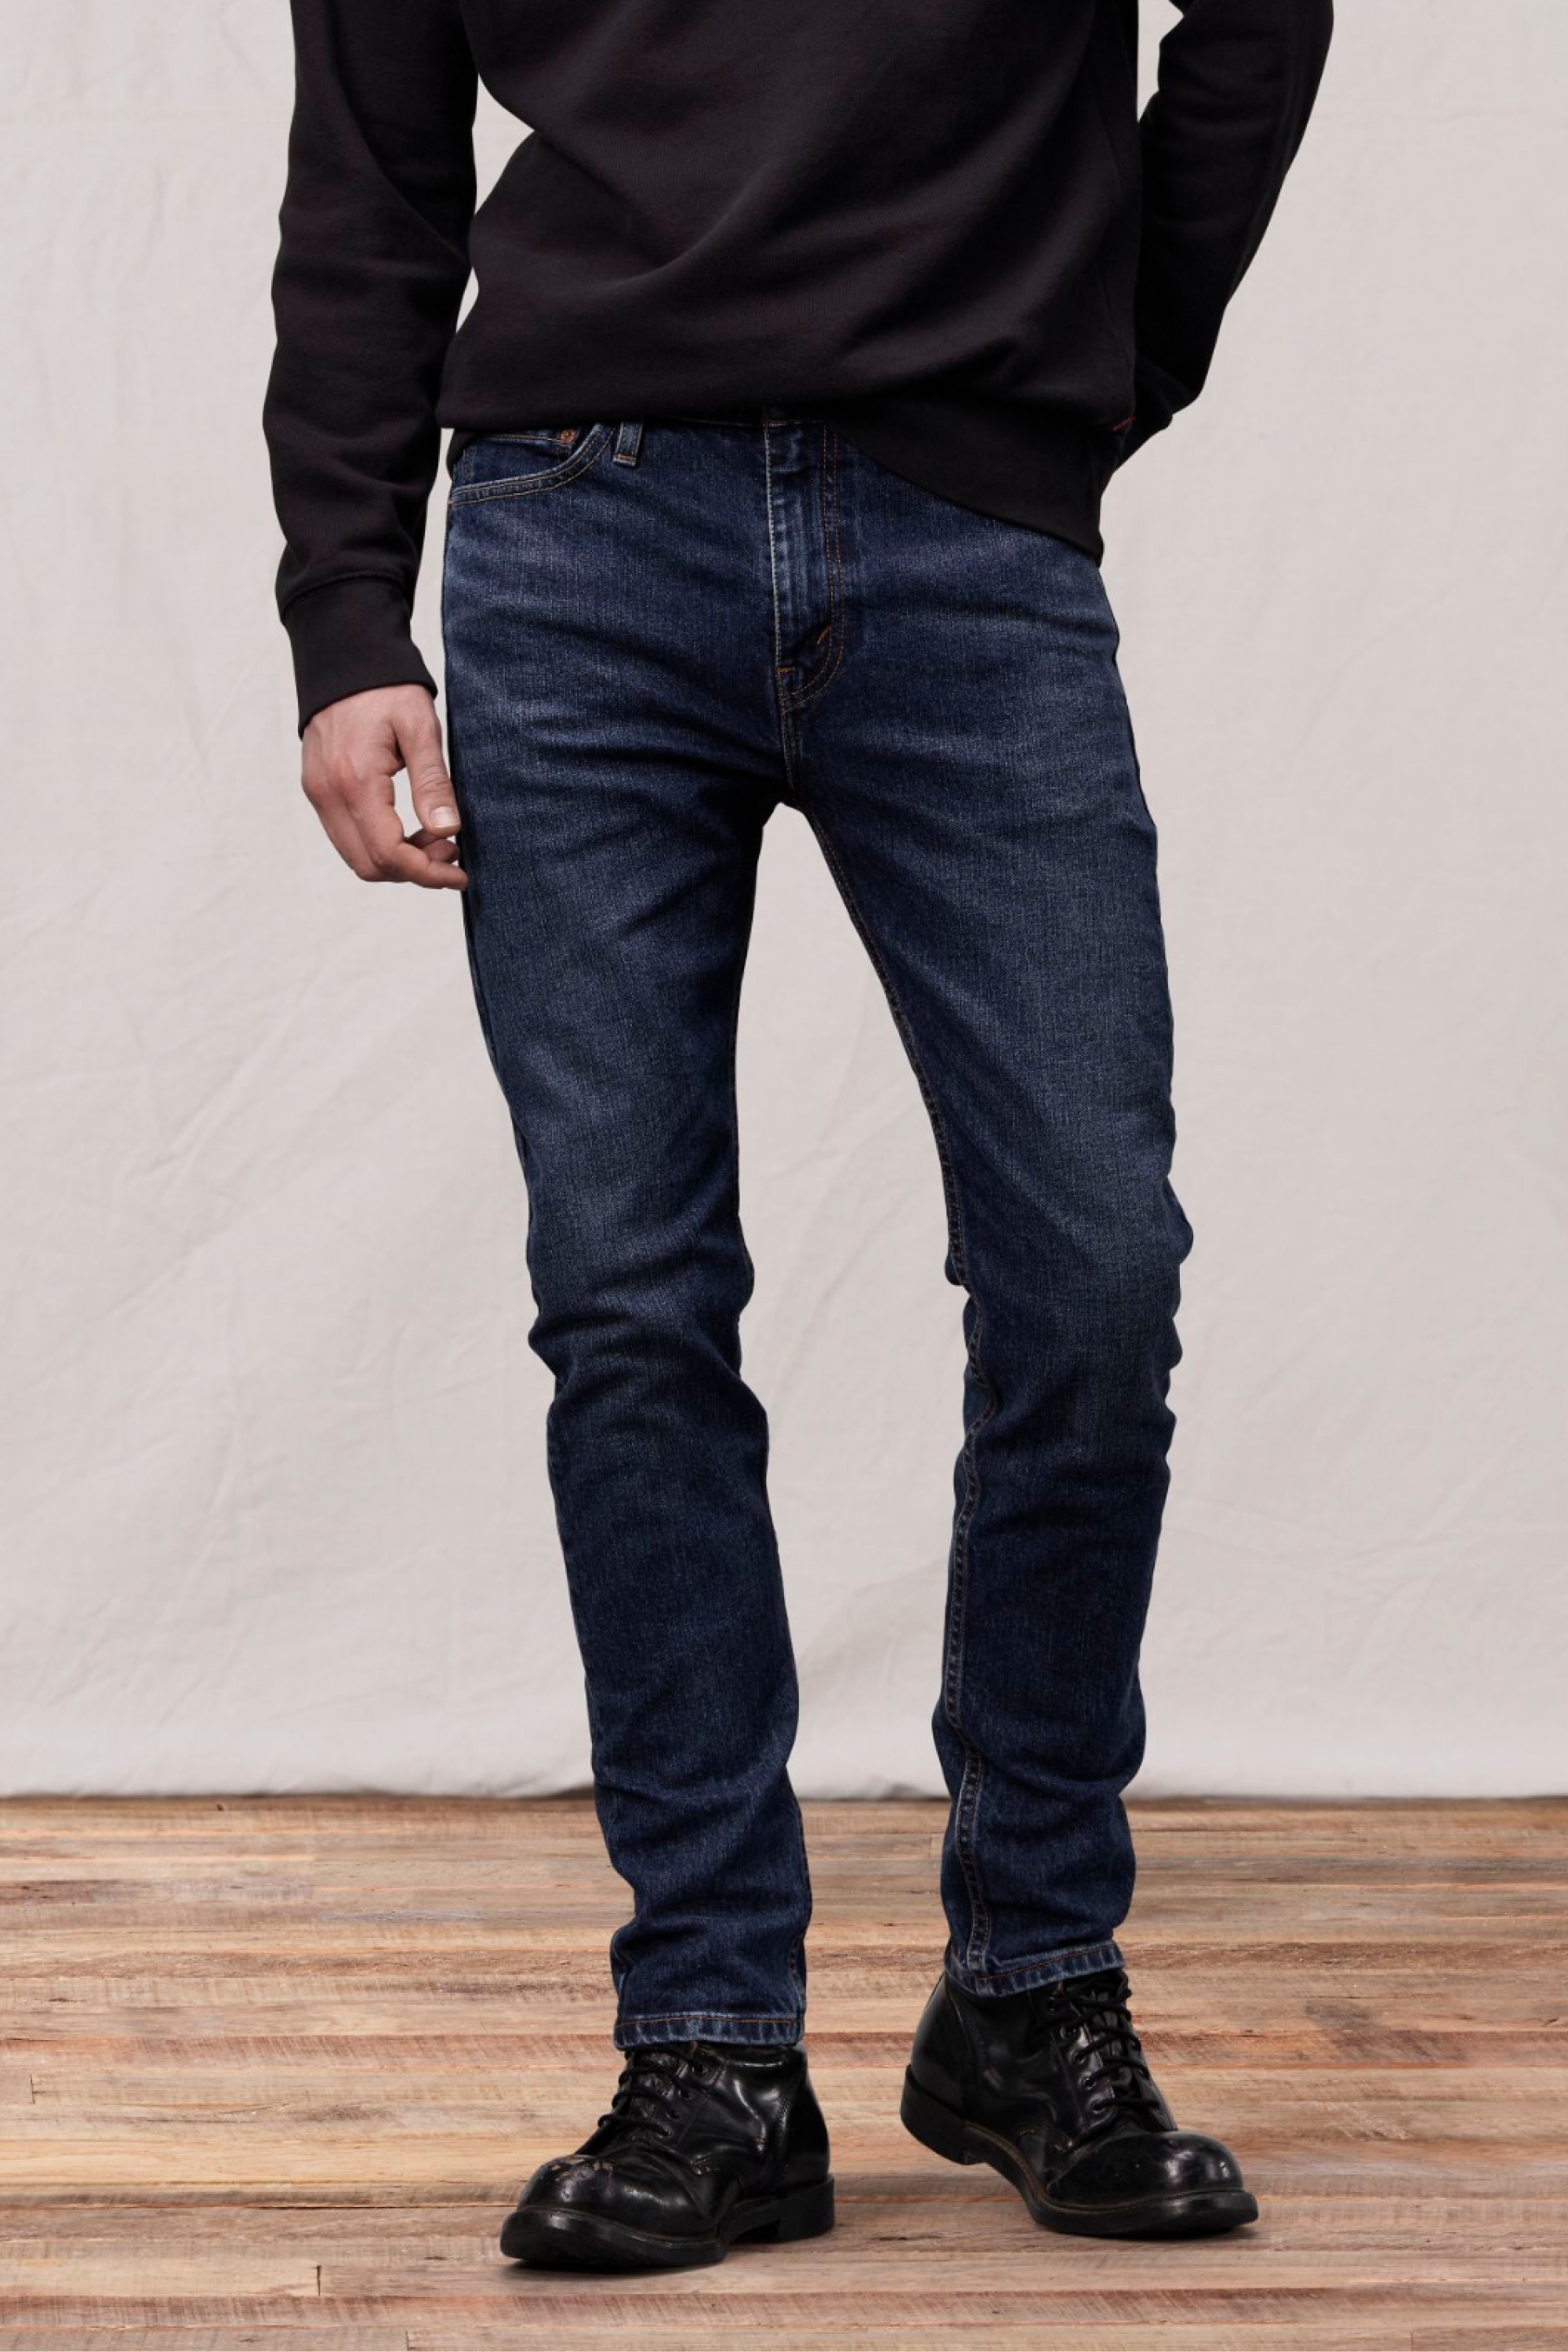 levi's men's jeans style guide